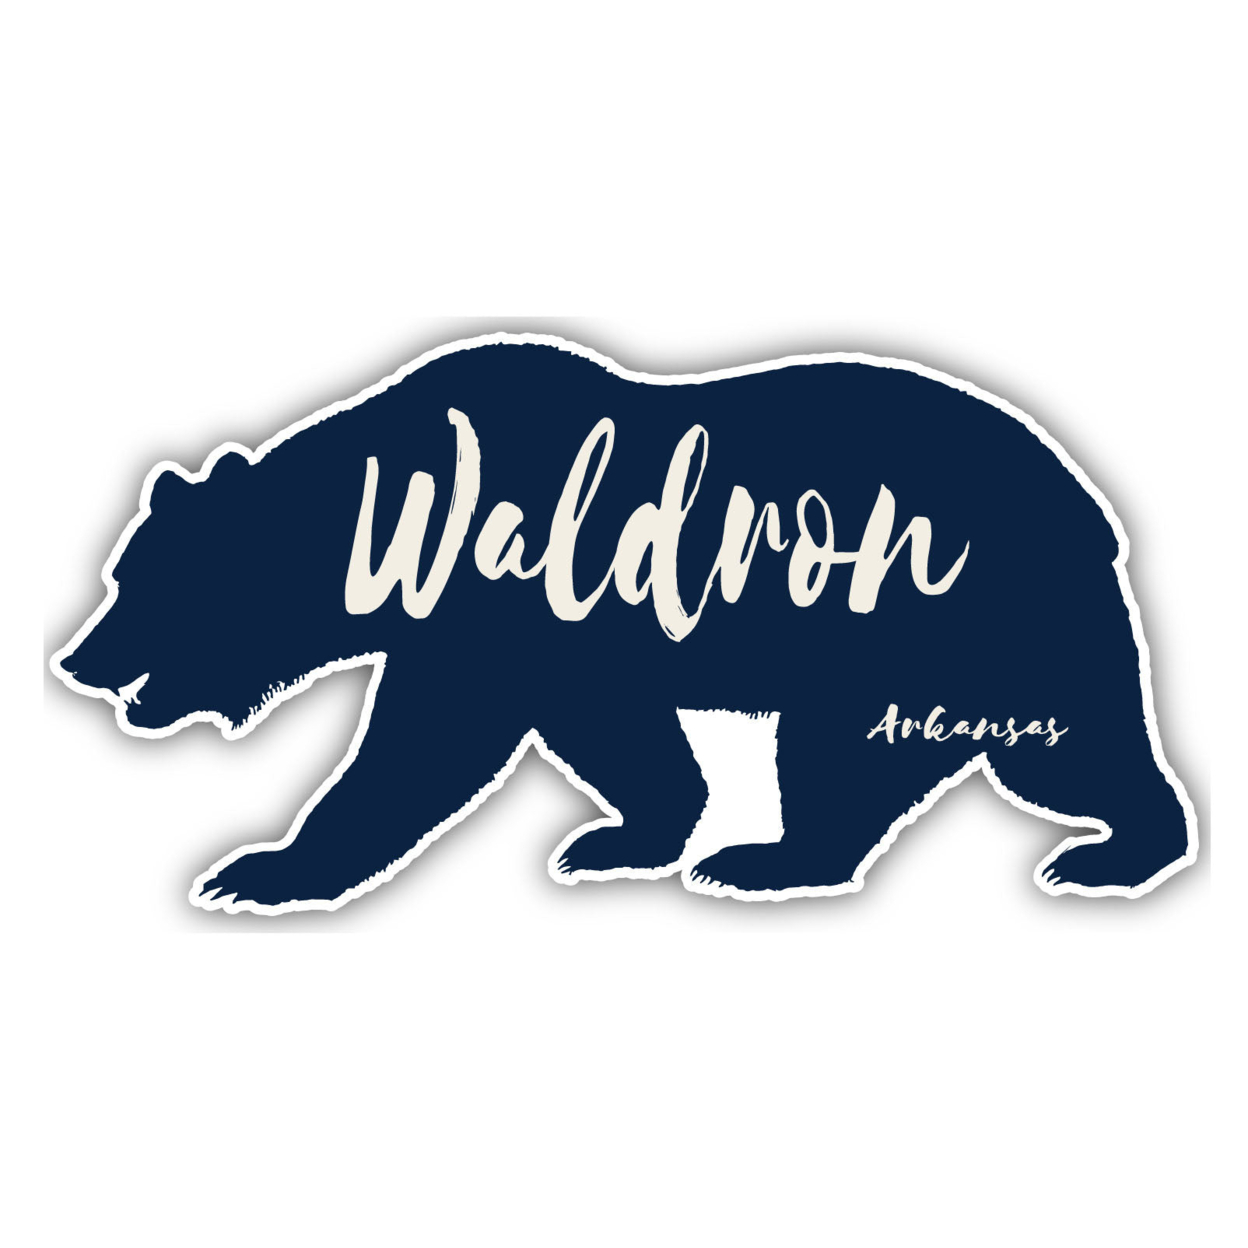 Waldron Arkansas Souvenir Decorative Stickers (Choose Theme And Size) - Single Unit, 4-Inch, Bear